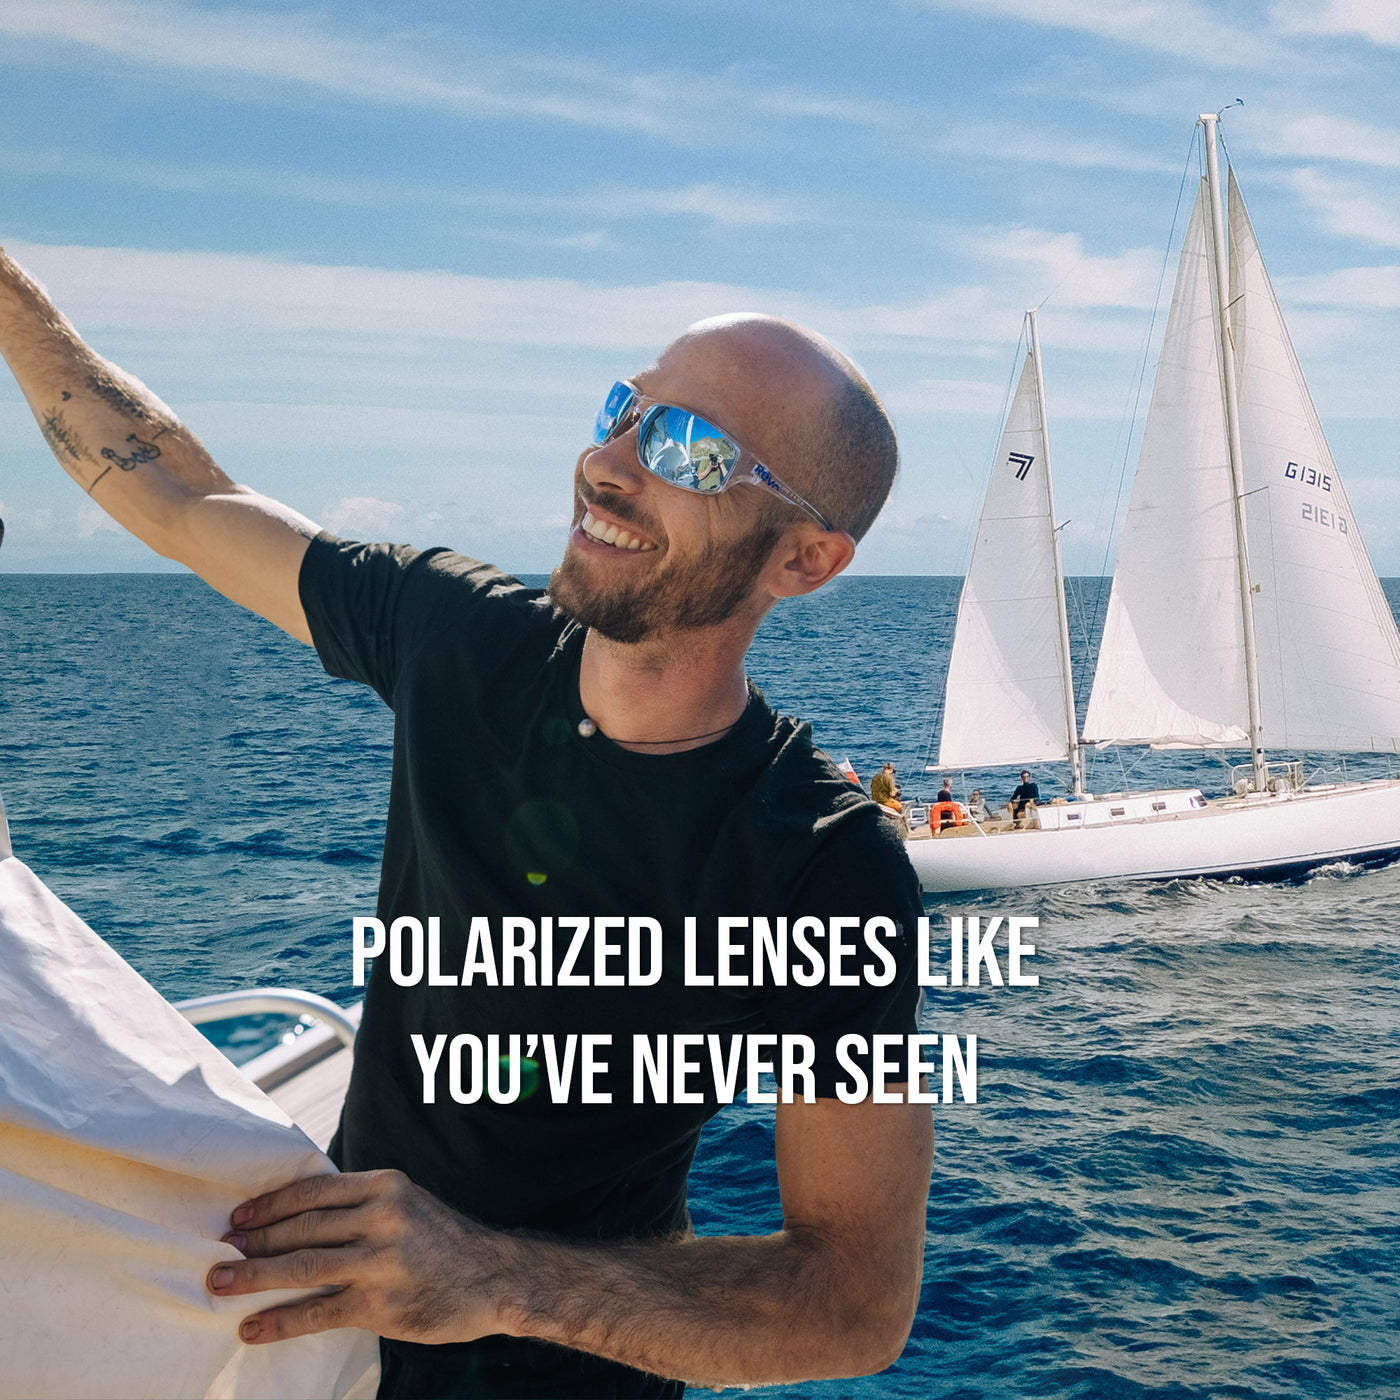 Buy Eyewearlabs l Unisex Polarized Wayfarer Sunglasses For Driving